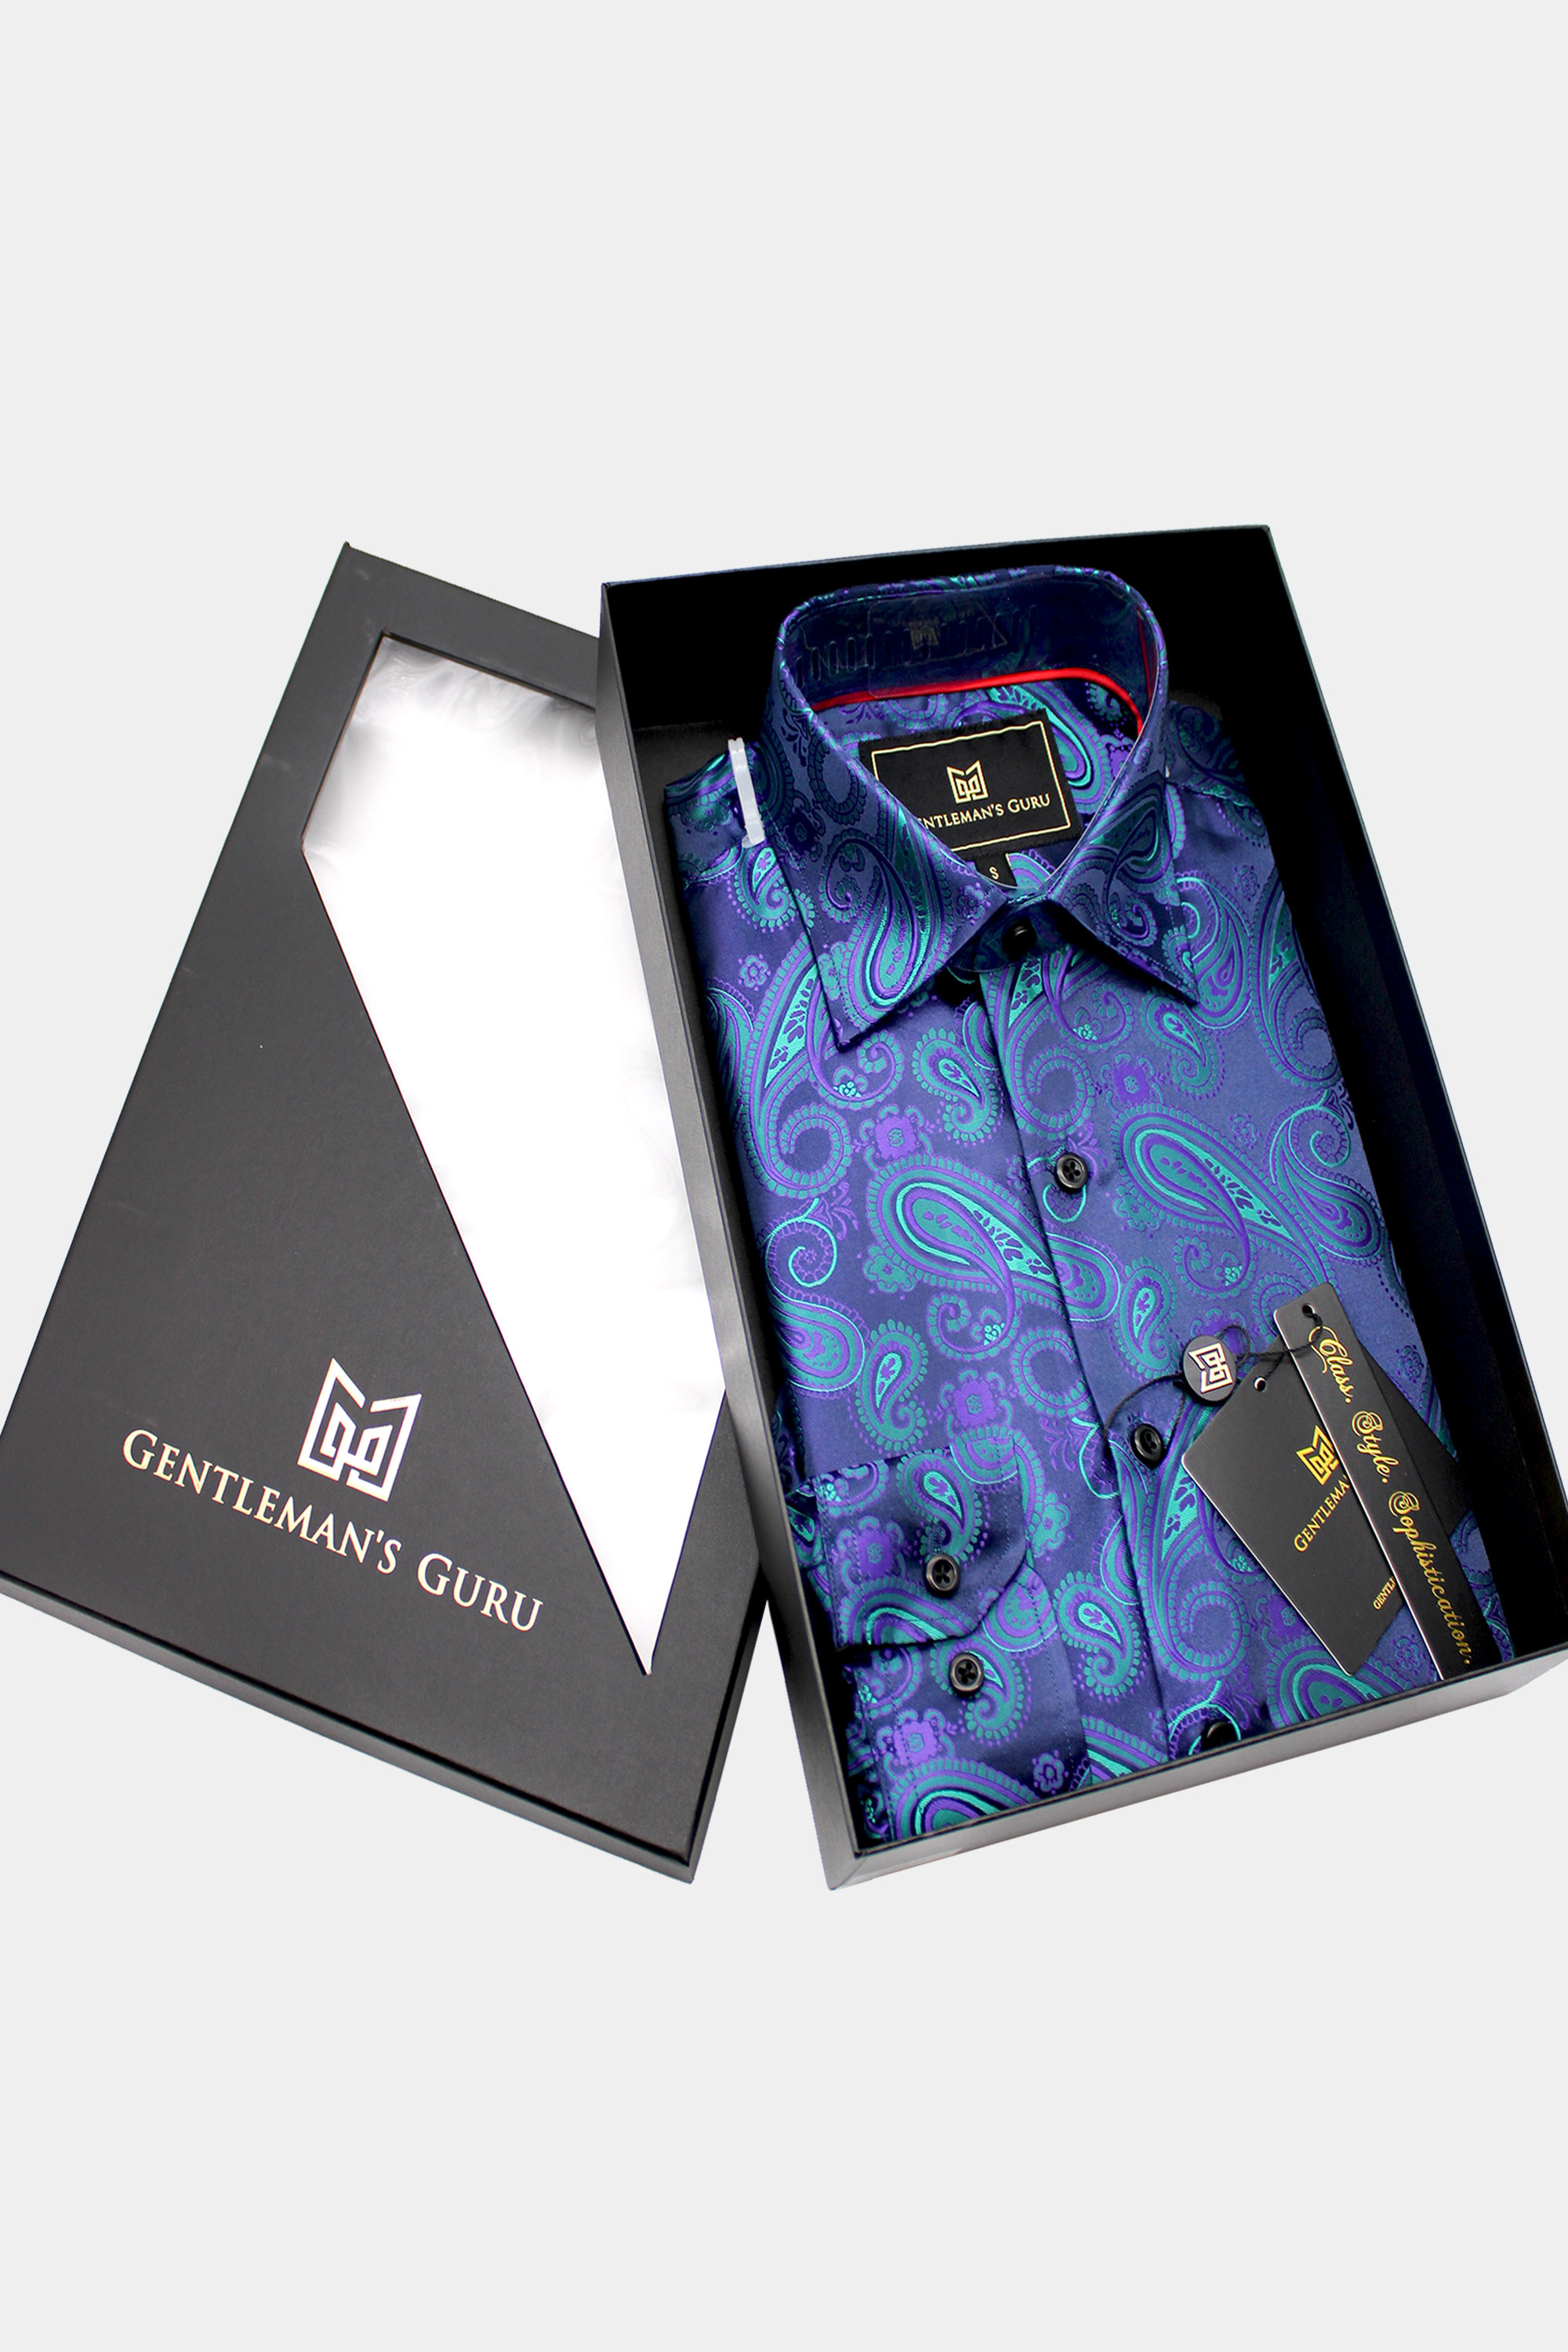 Purple and Turquoise Shirt | Gentleman's Guru